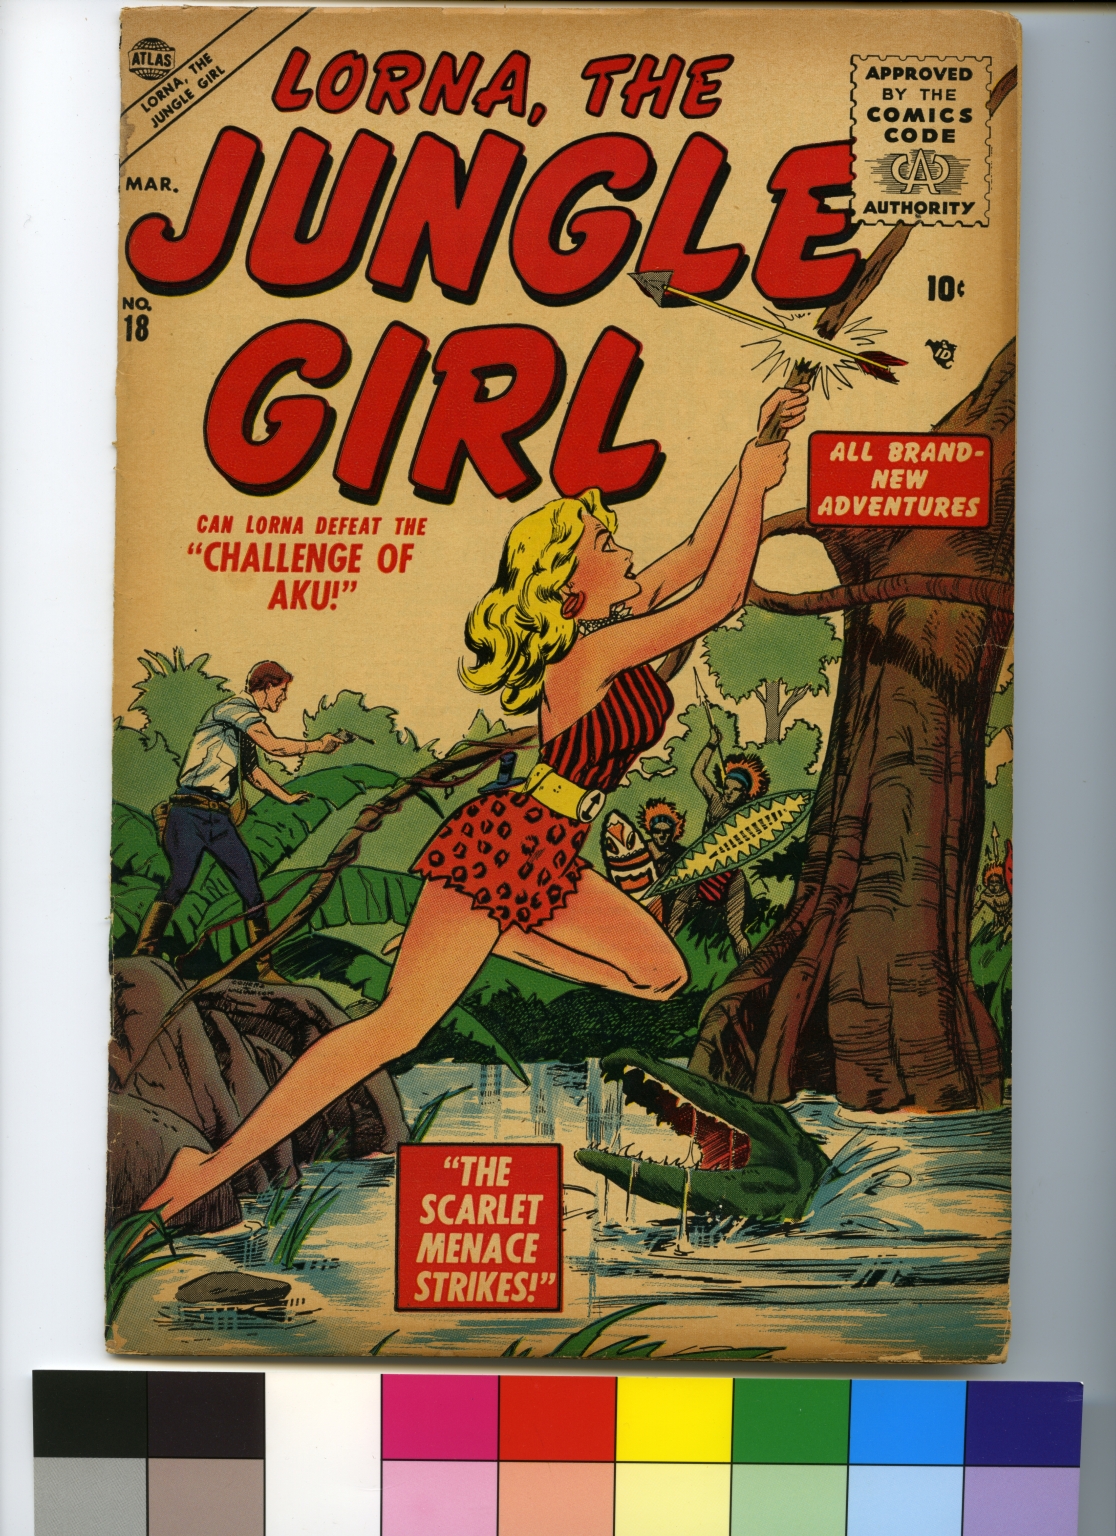 Lorna, The Jungle Girl